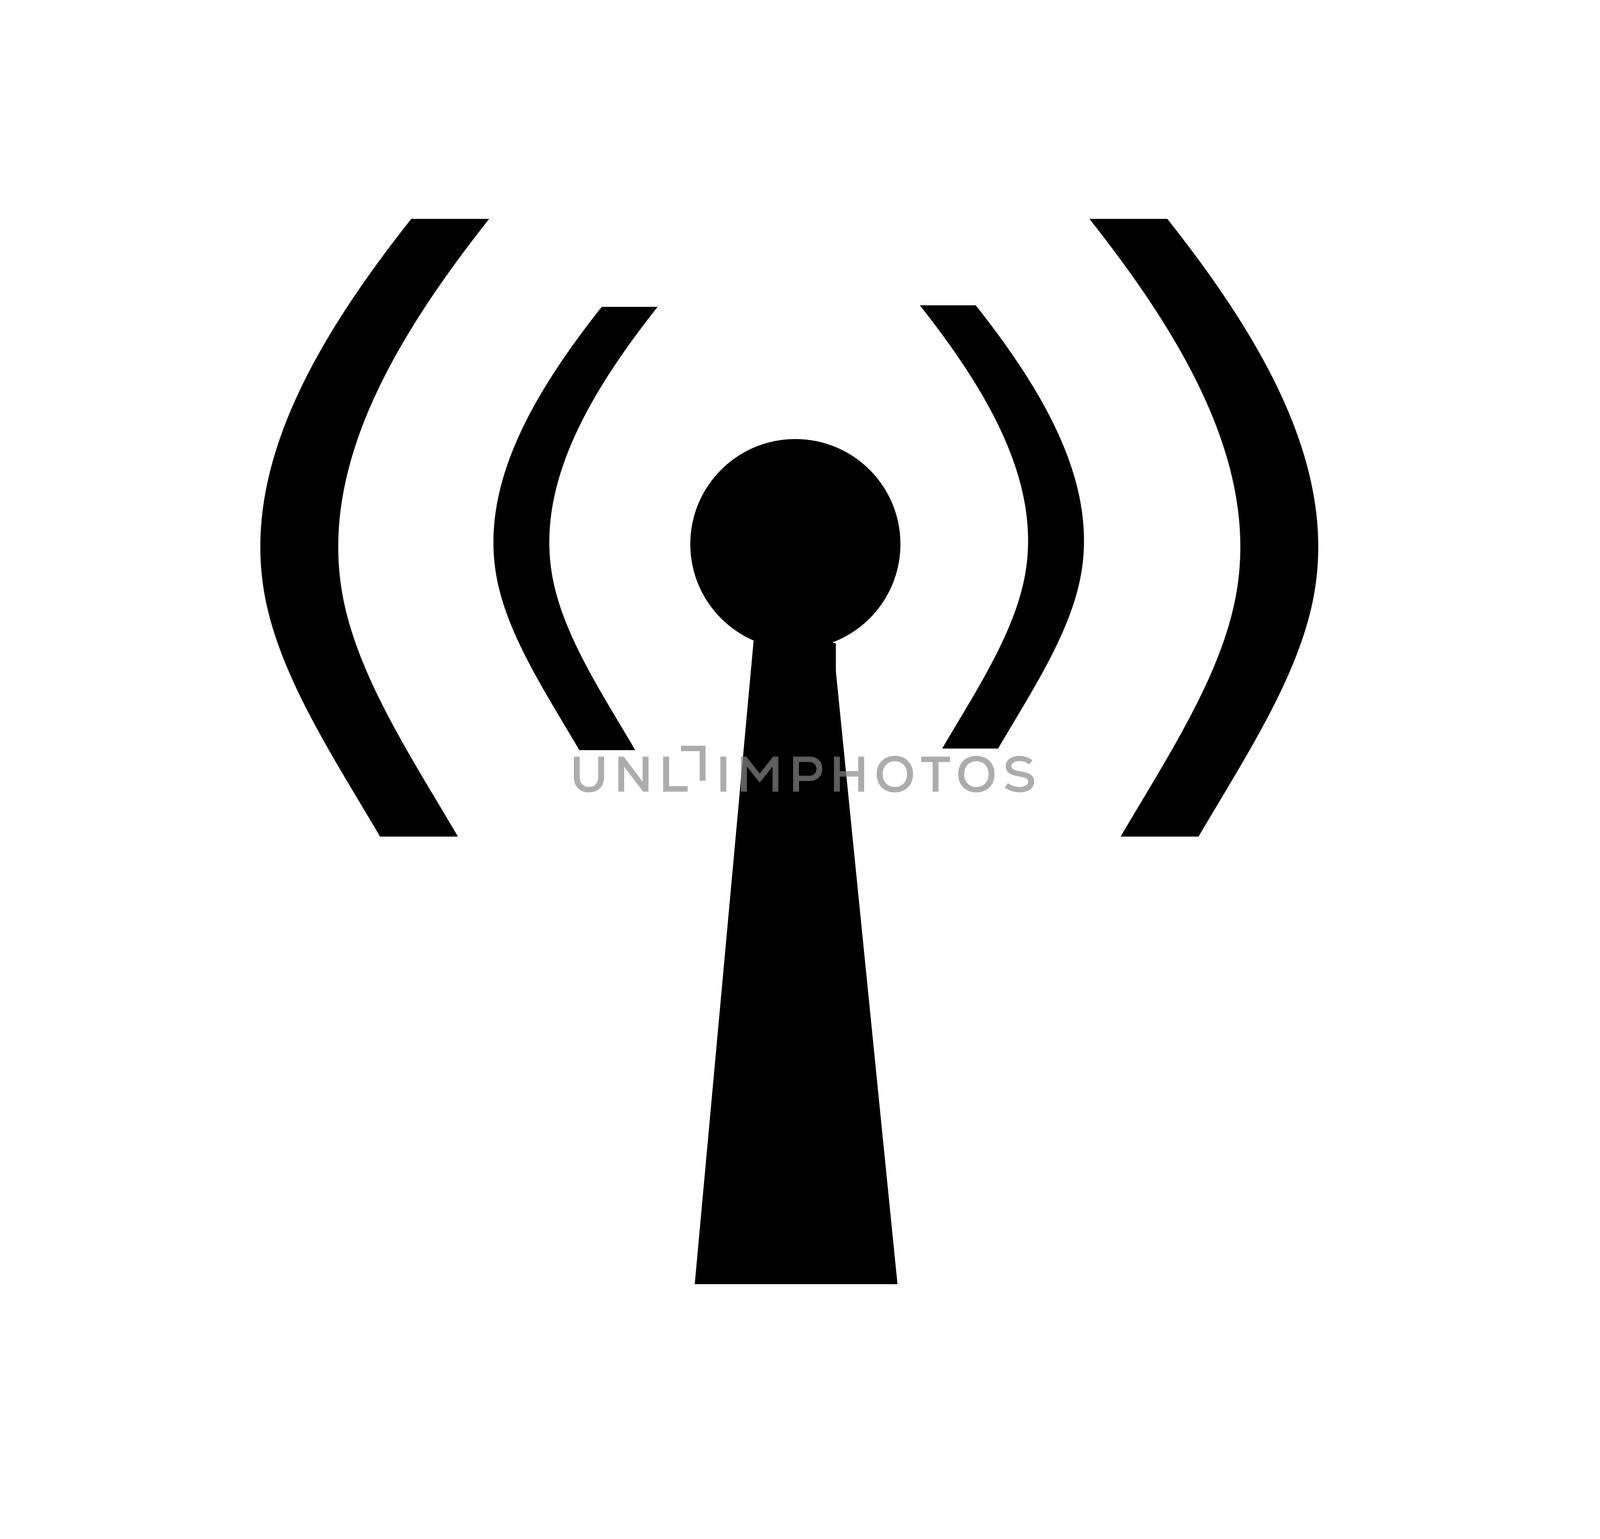 portrait of wireless 802.11 hot spot sign